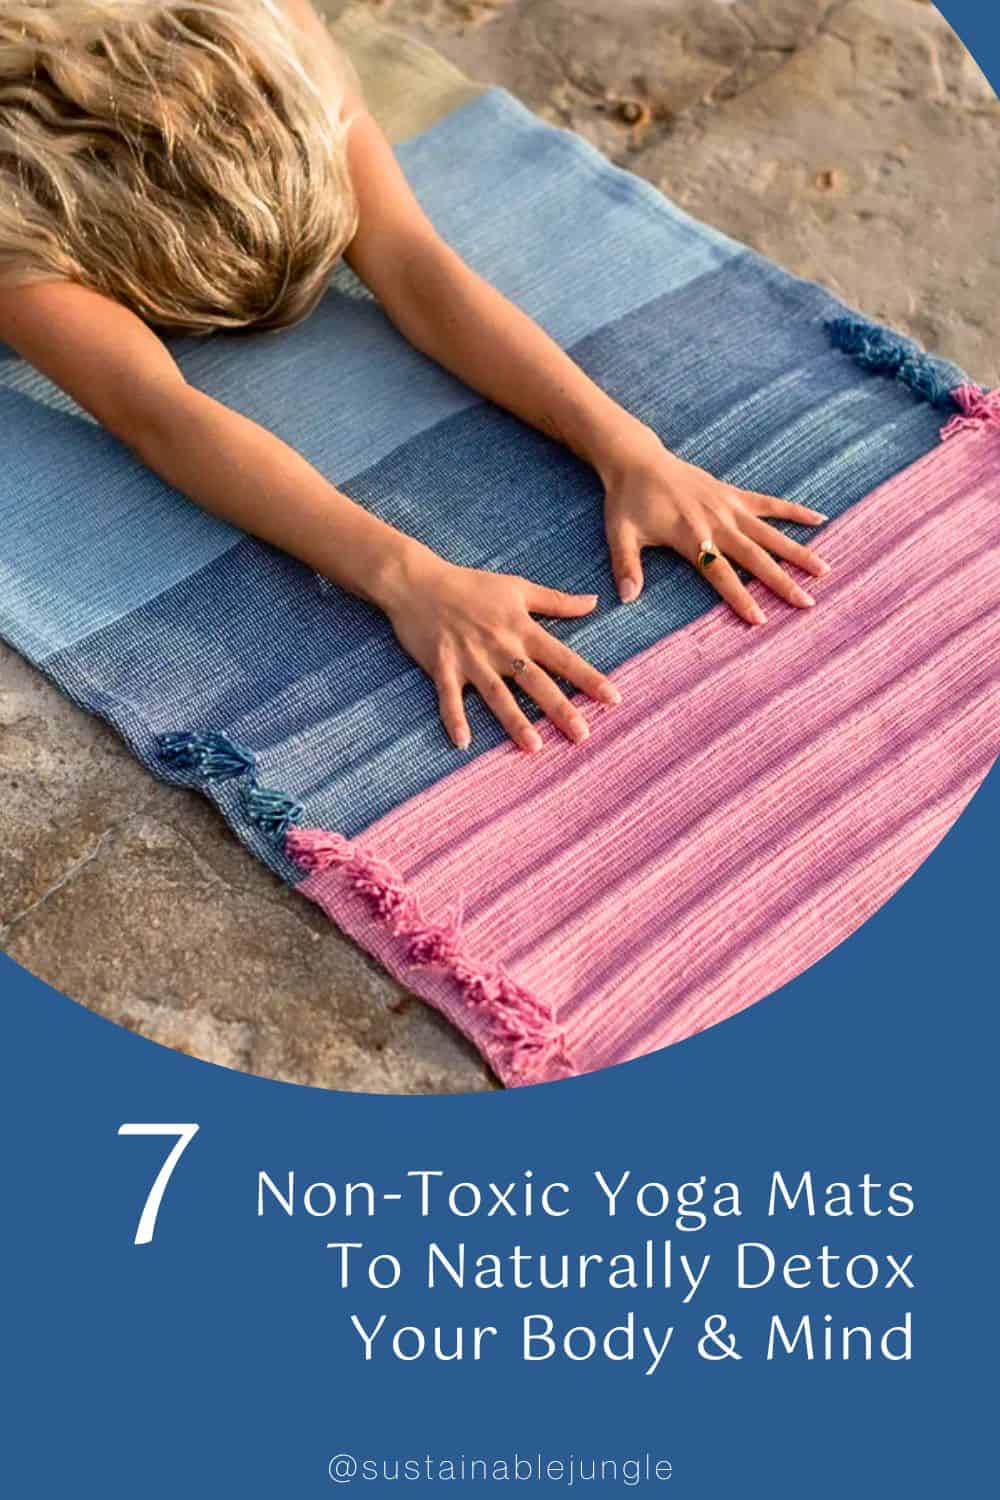 7 Non-Toxic Yoga Mats To Naturally Detox Your Body & Mind Image by Öko Living #nontoxicyogamats #naturalyogamats #naturalrubberyogamat #bestnontoxicyogamat #affordablenontoxicyogamat #sustainablejungle